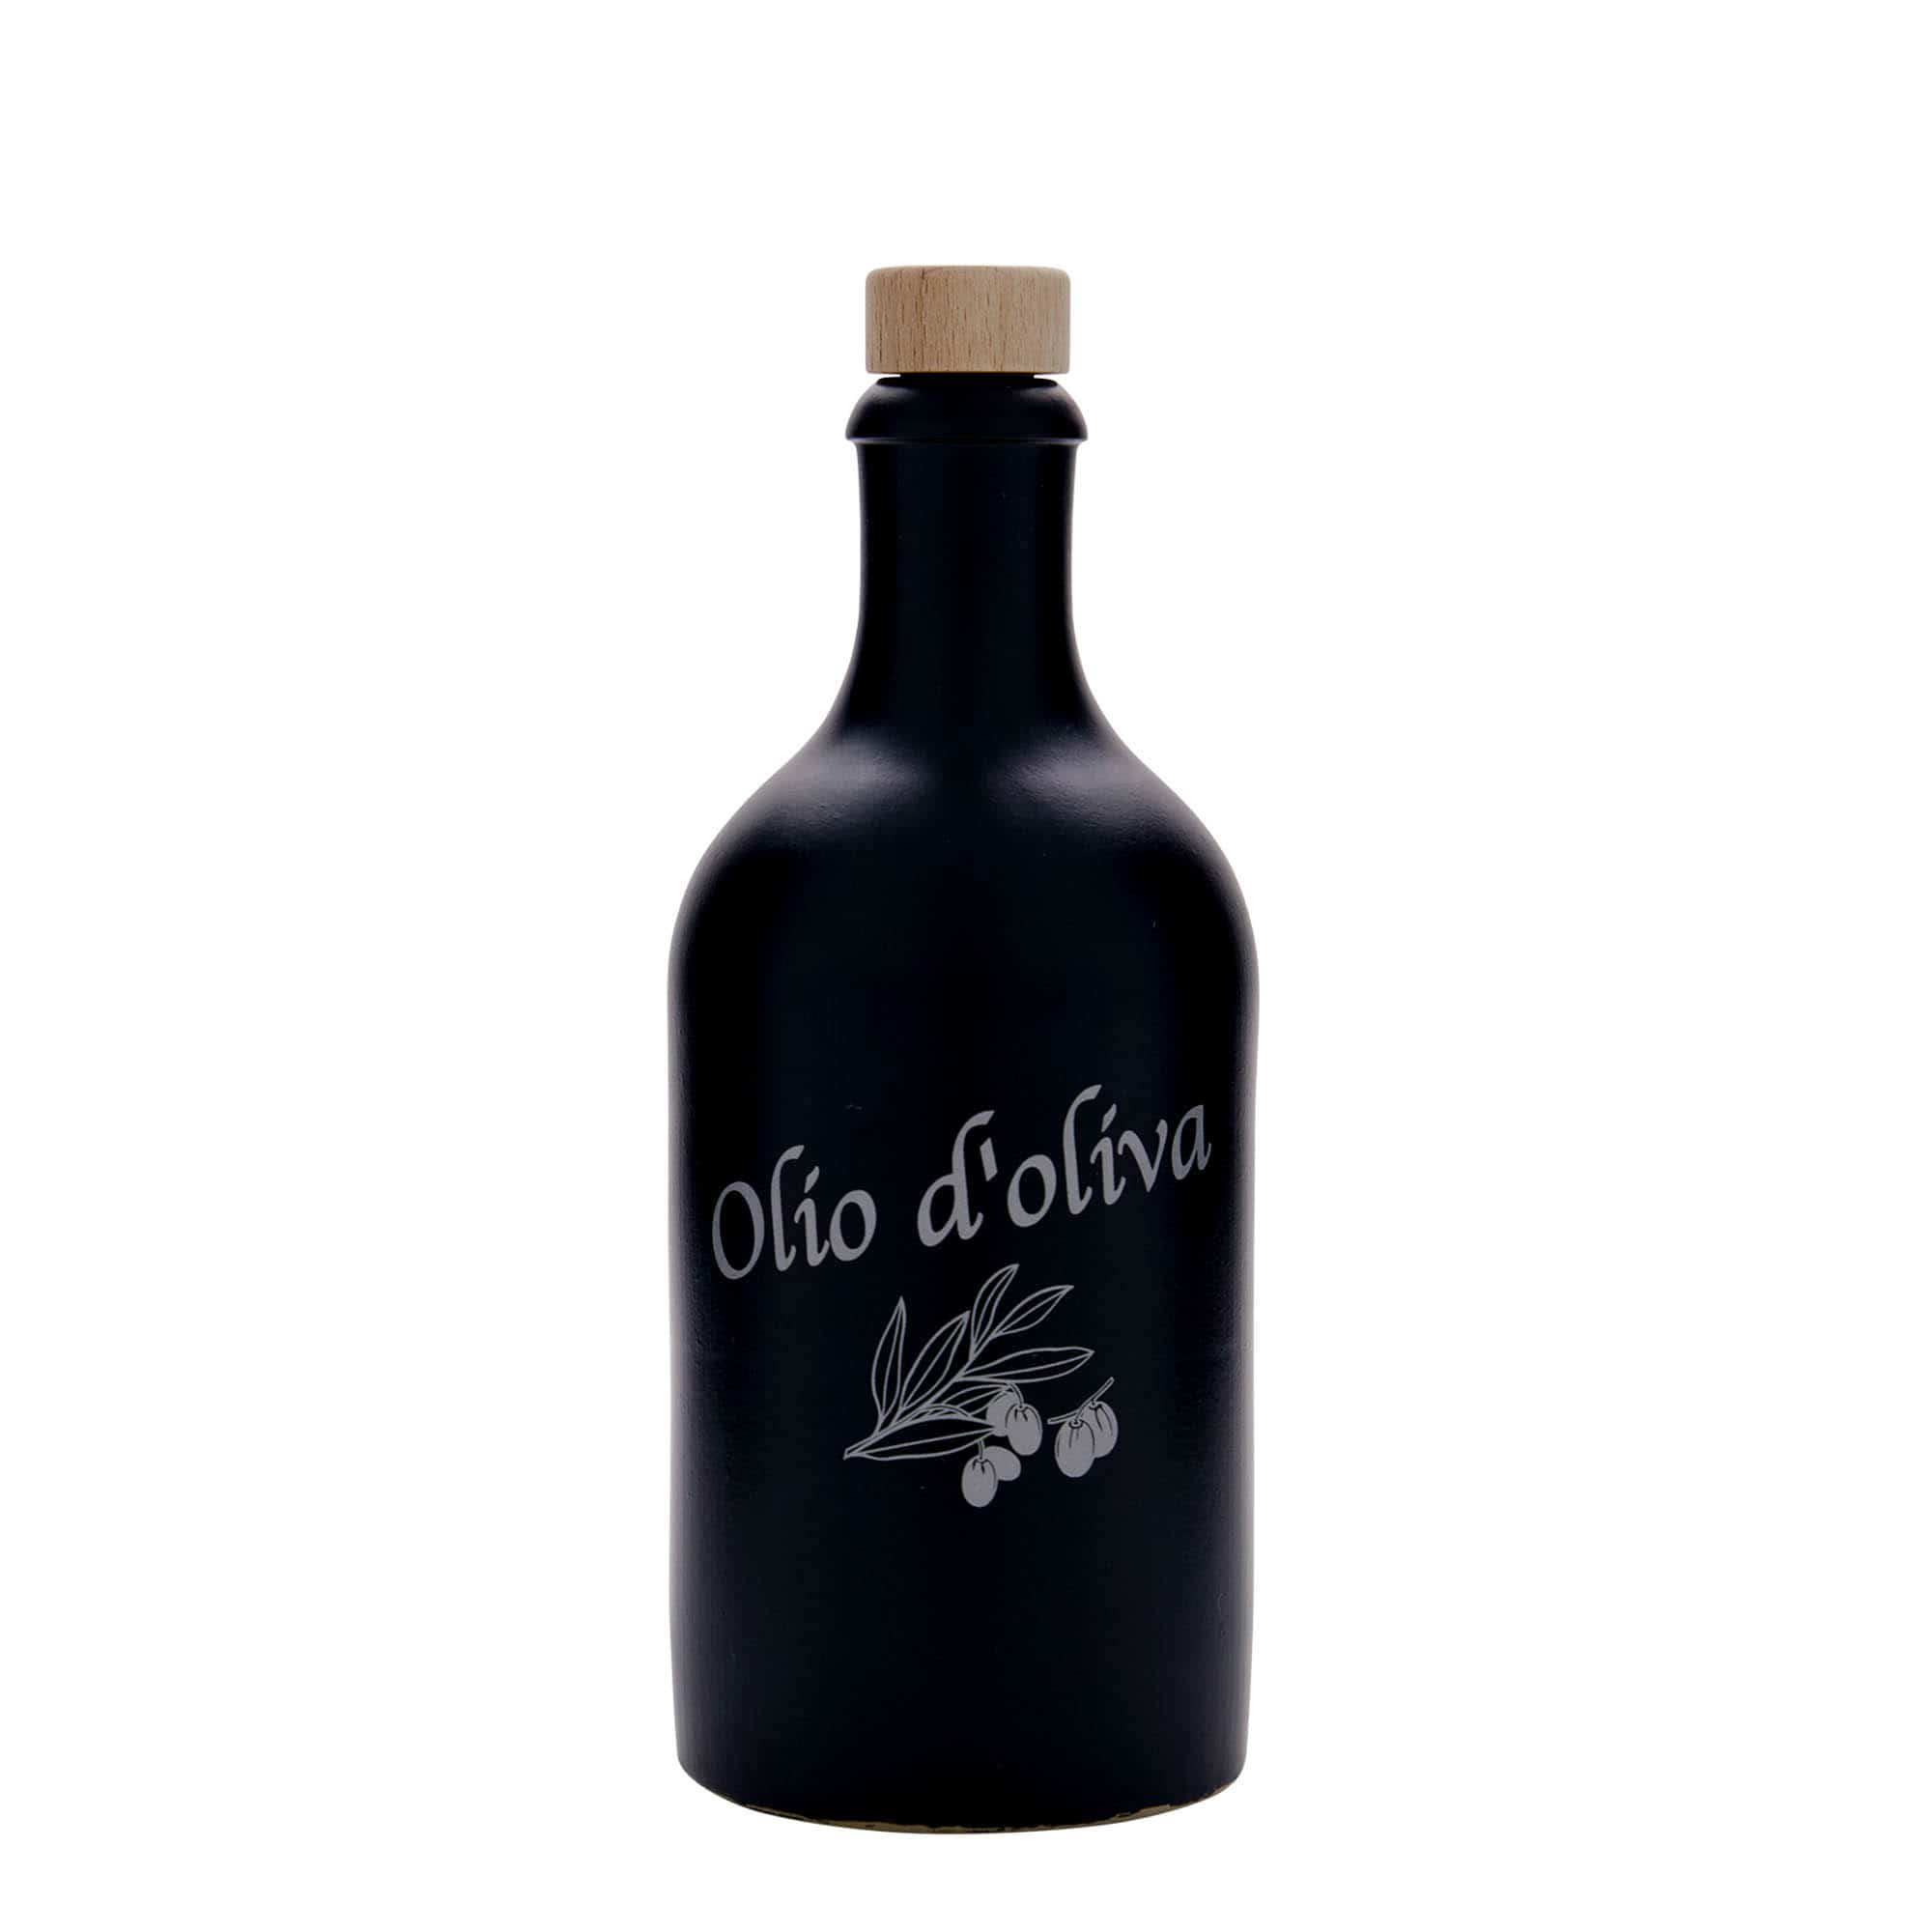 500 ml earthen jug, print: Olio d'Oliva, stoneware, black, closure: cork